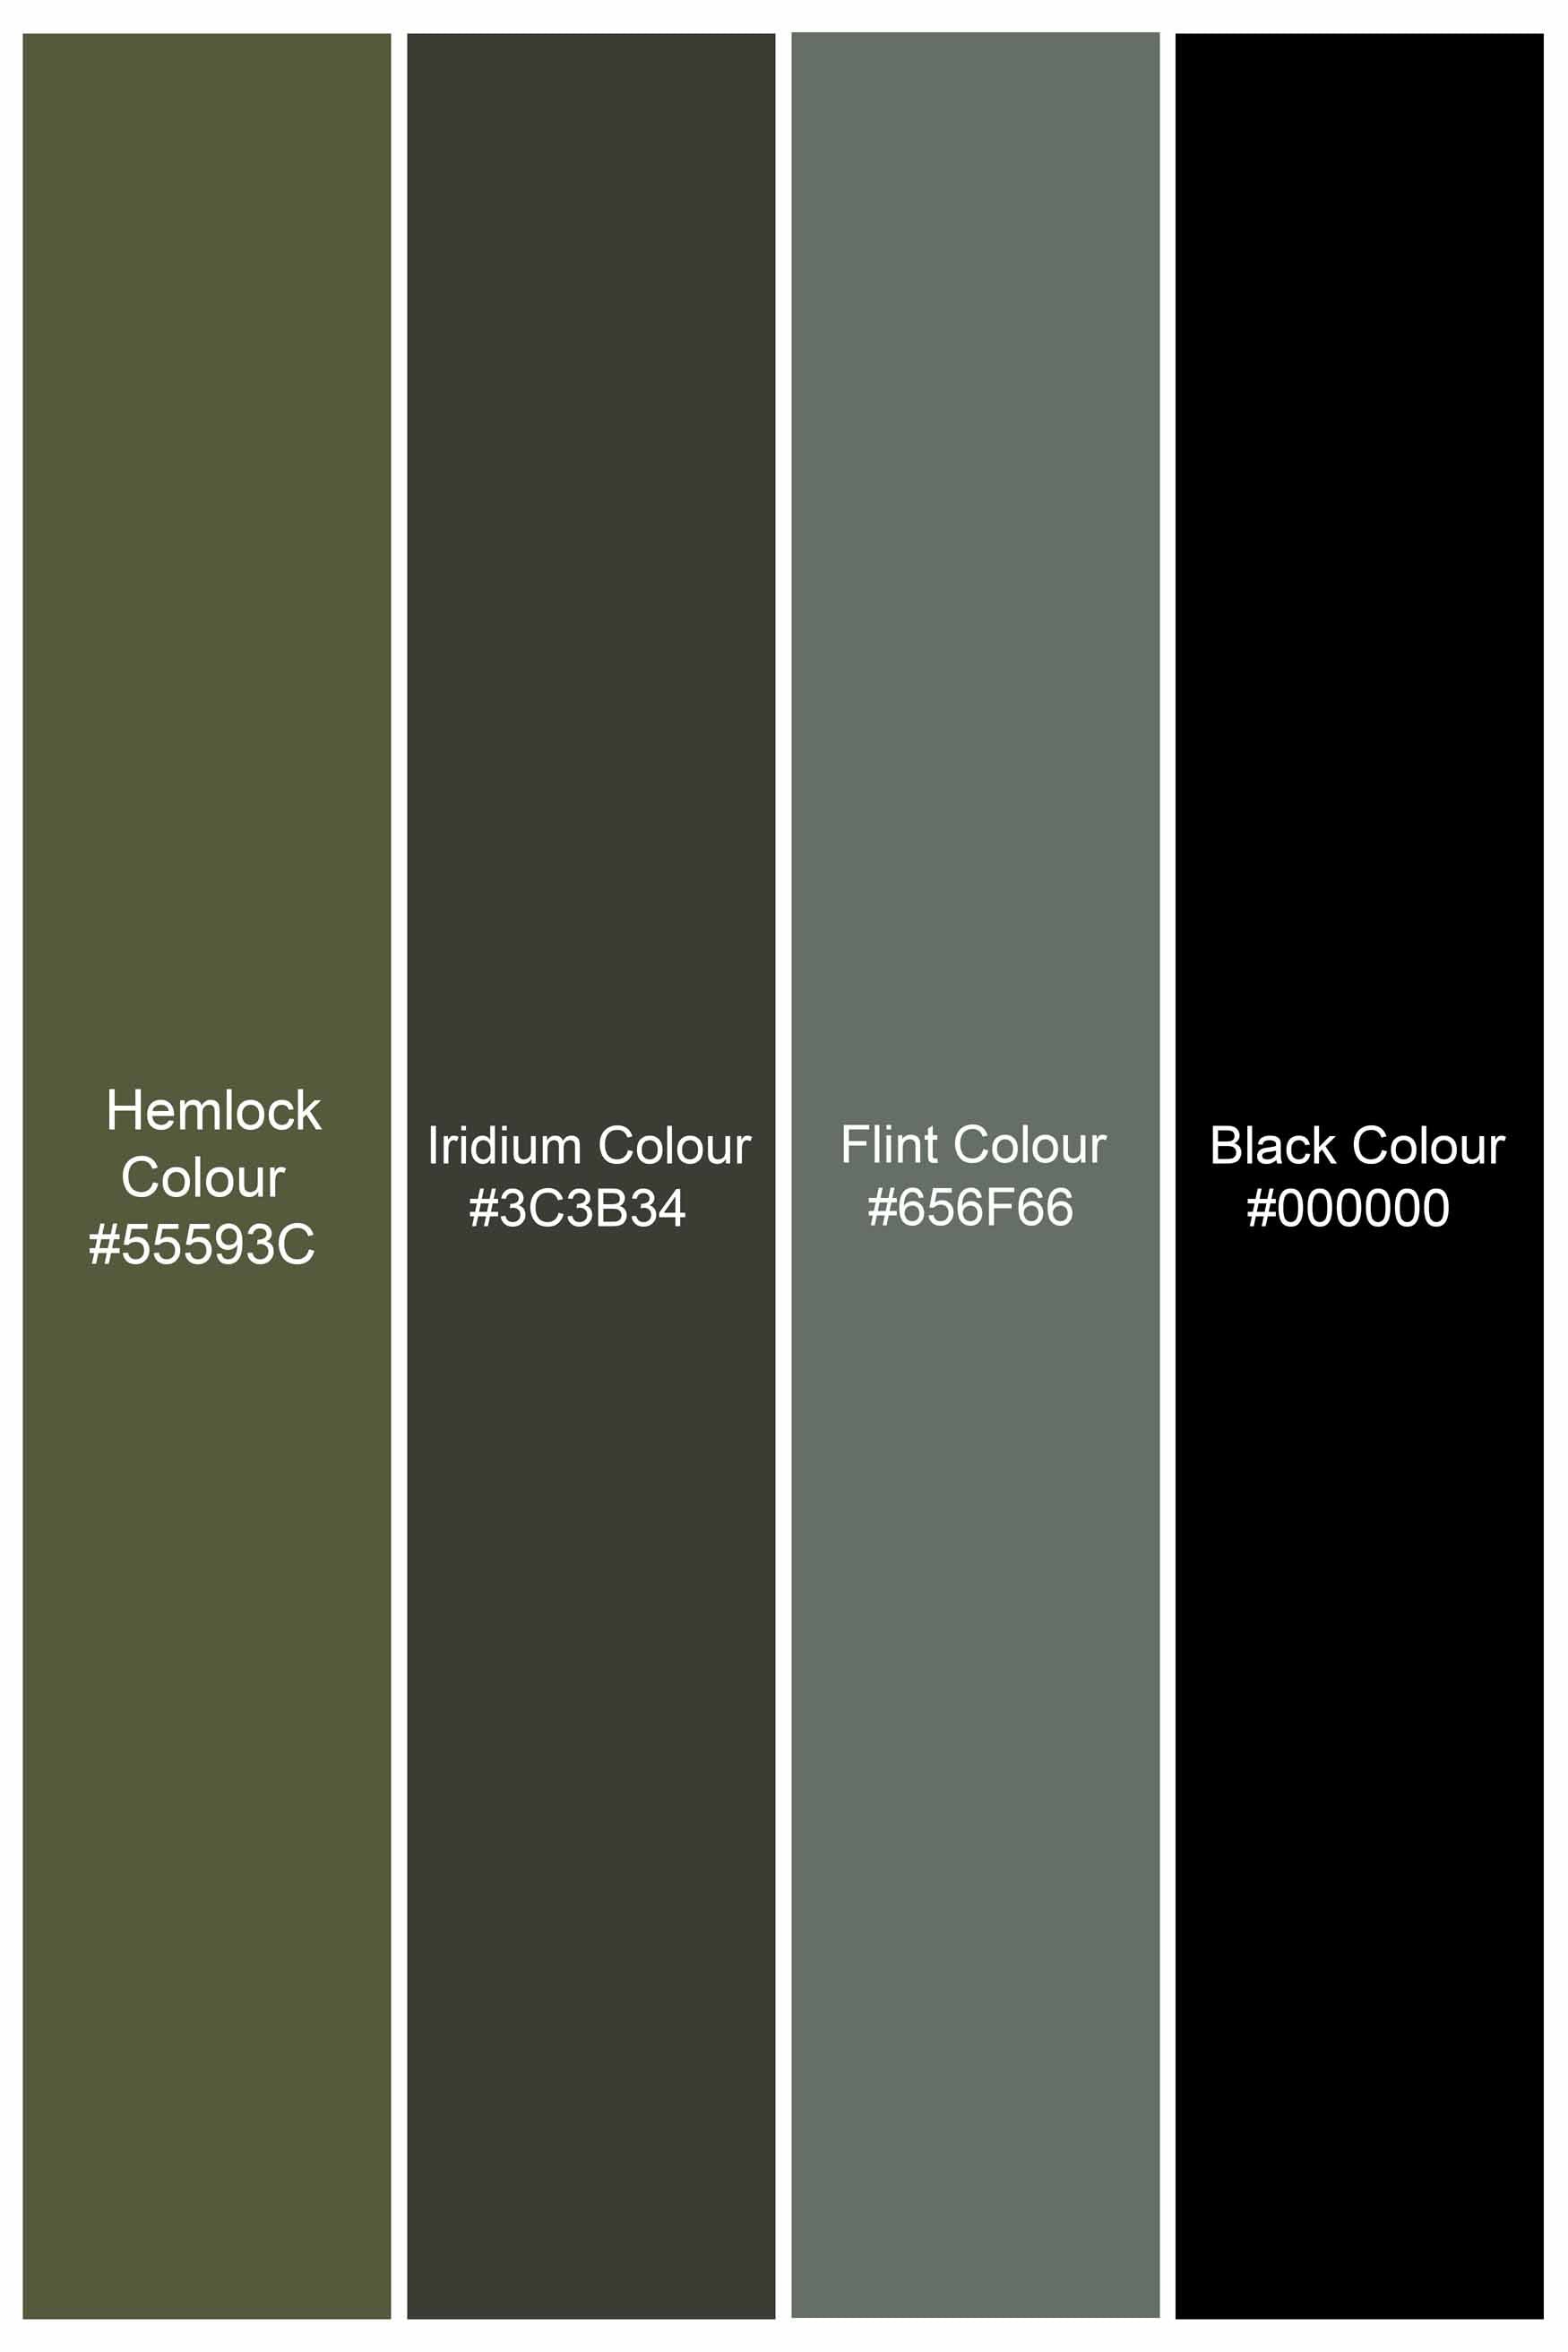 Hemlock Green and Iridium Brown Camouflage Royal Oxford Designer Shirt